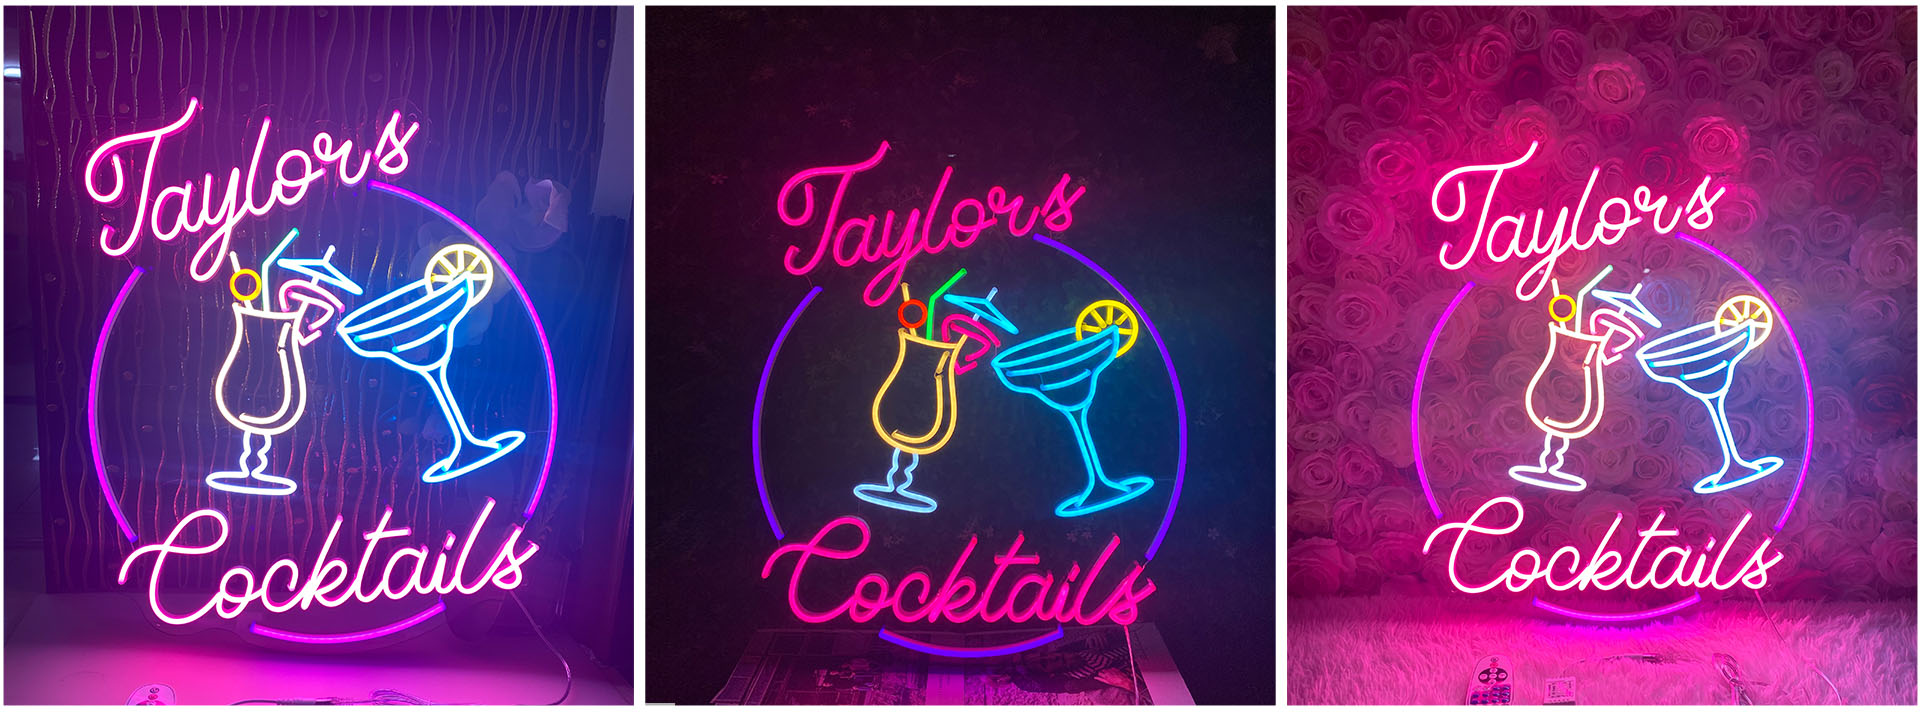 cocktails neon bar sign